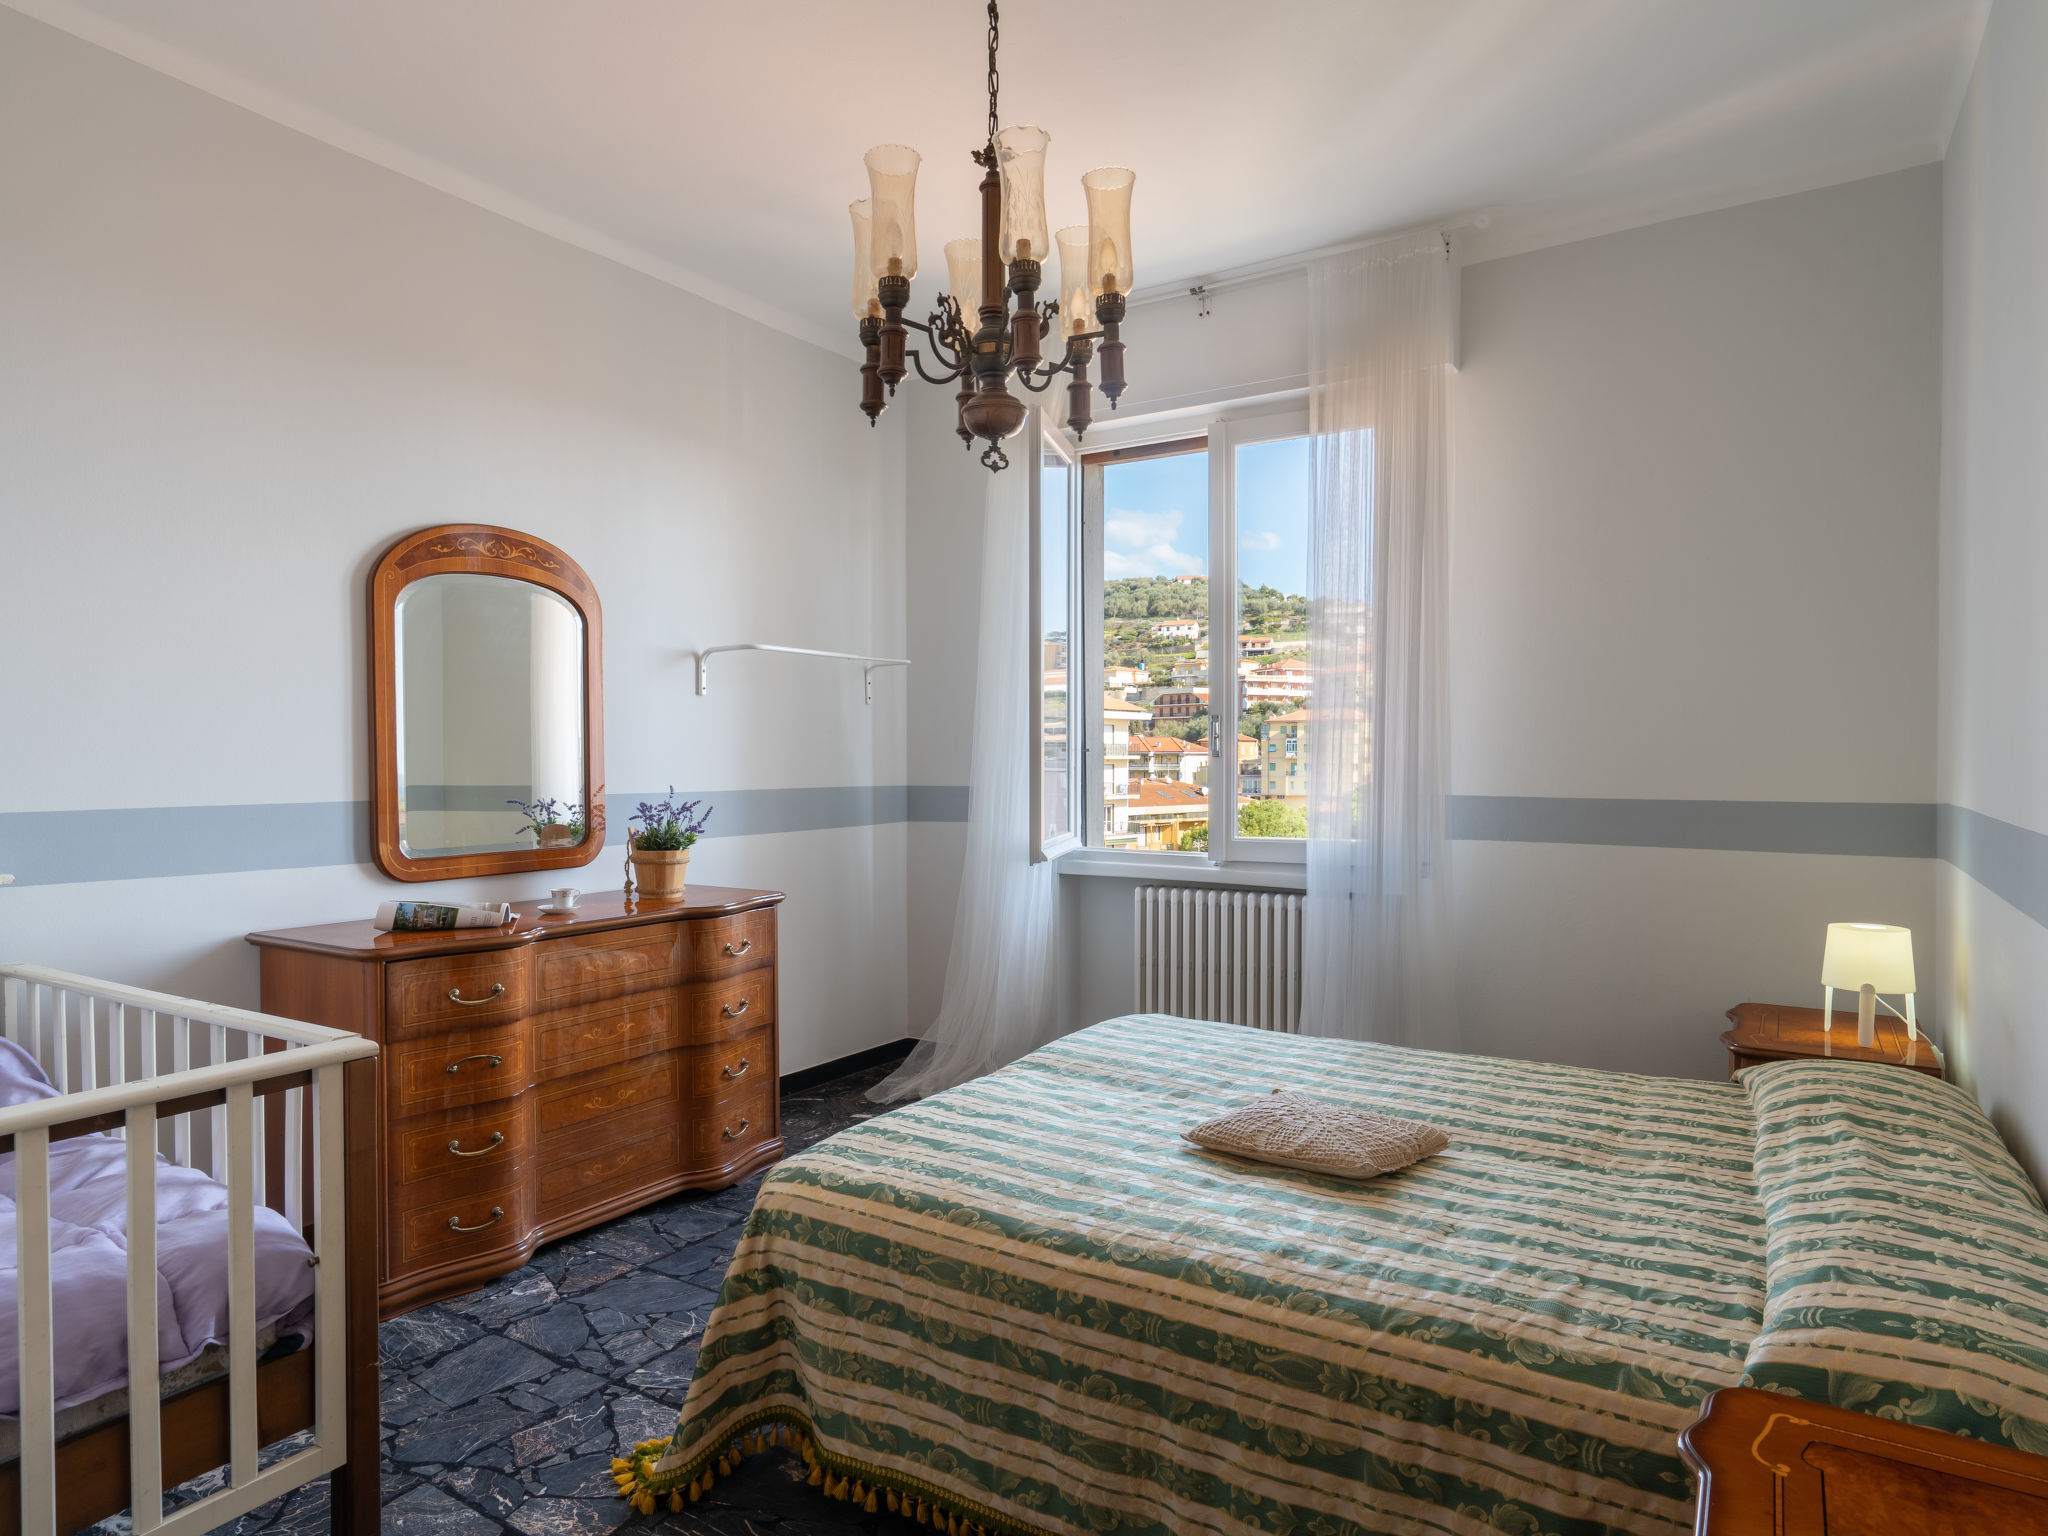 Photo 4 - 3 bedroom Apartment in San Lorenzo al Mare with sea view